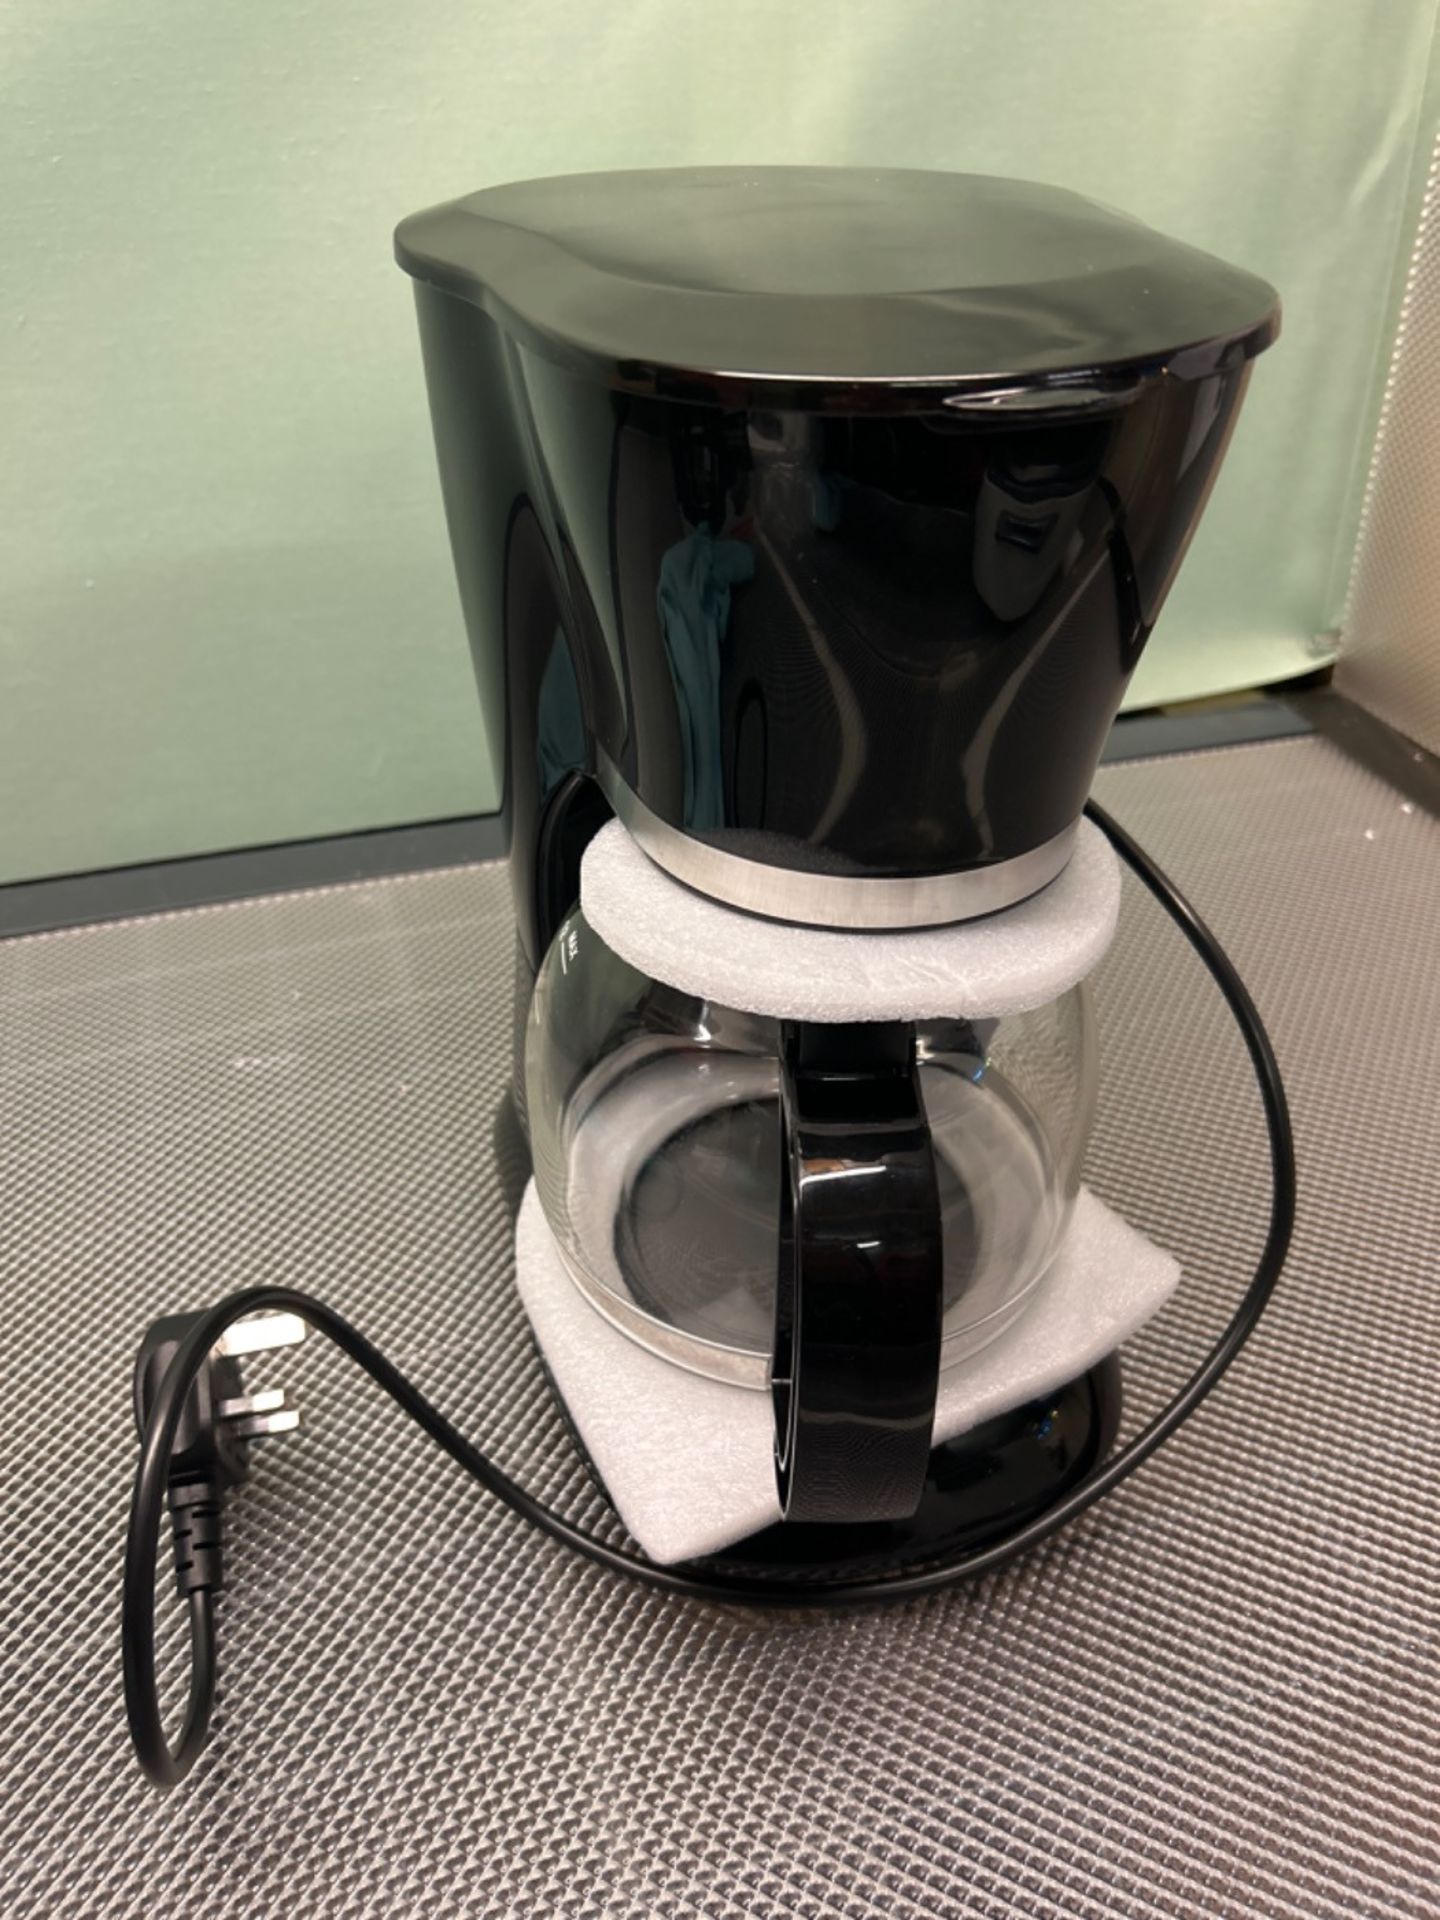 GEEPAS 1.5L Filter Coffee Machine | 800W Coffee Maker for Instant Coffee, Espresso, Macchiato & Mor - Image 2 of 3